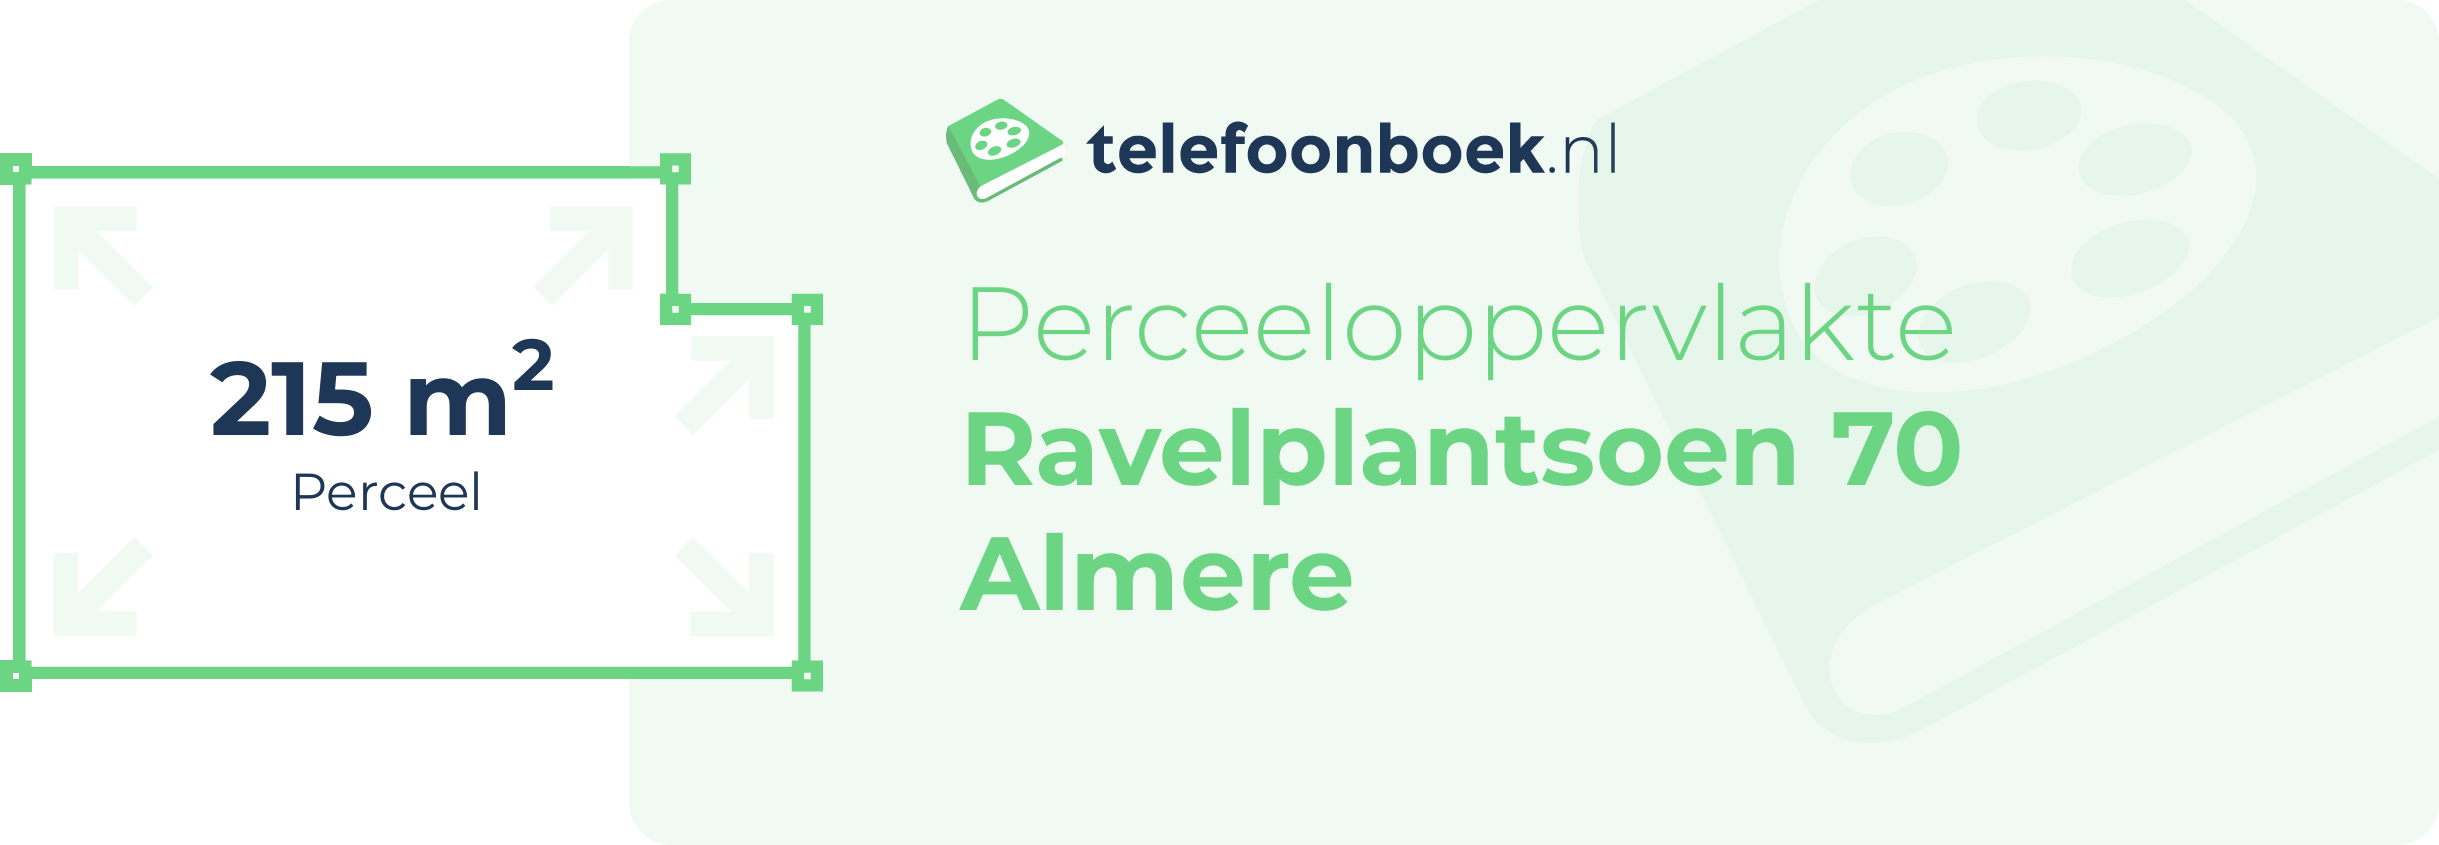 Perceeloppervlakte Ravelplantsoen 70 Almere